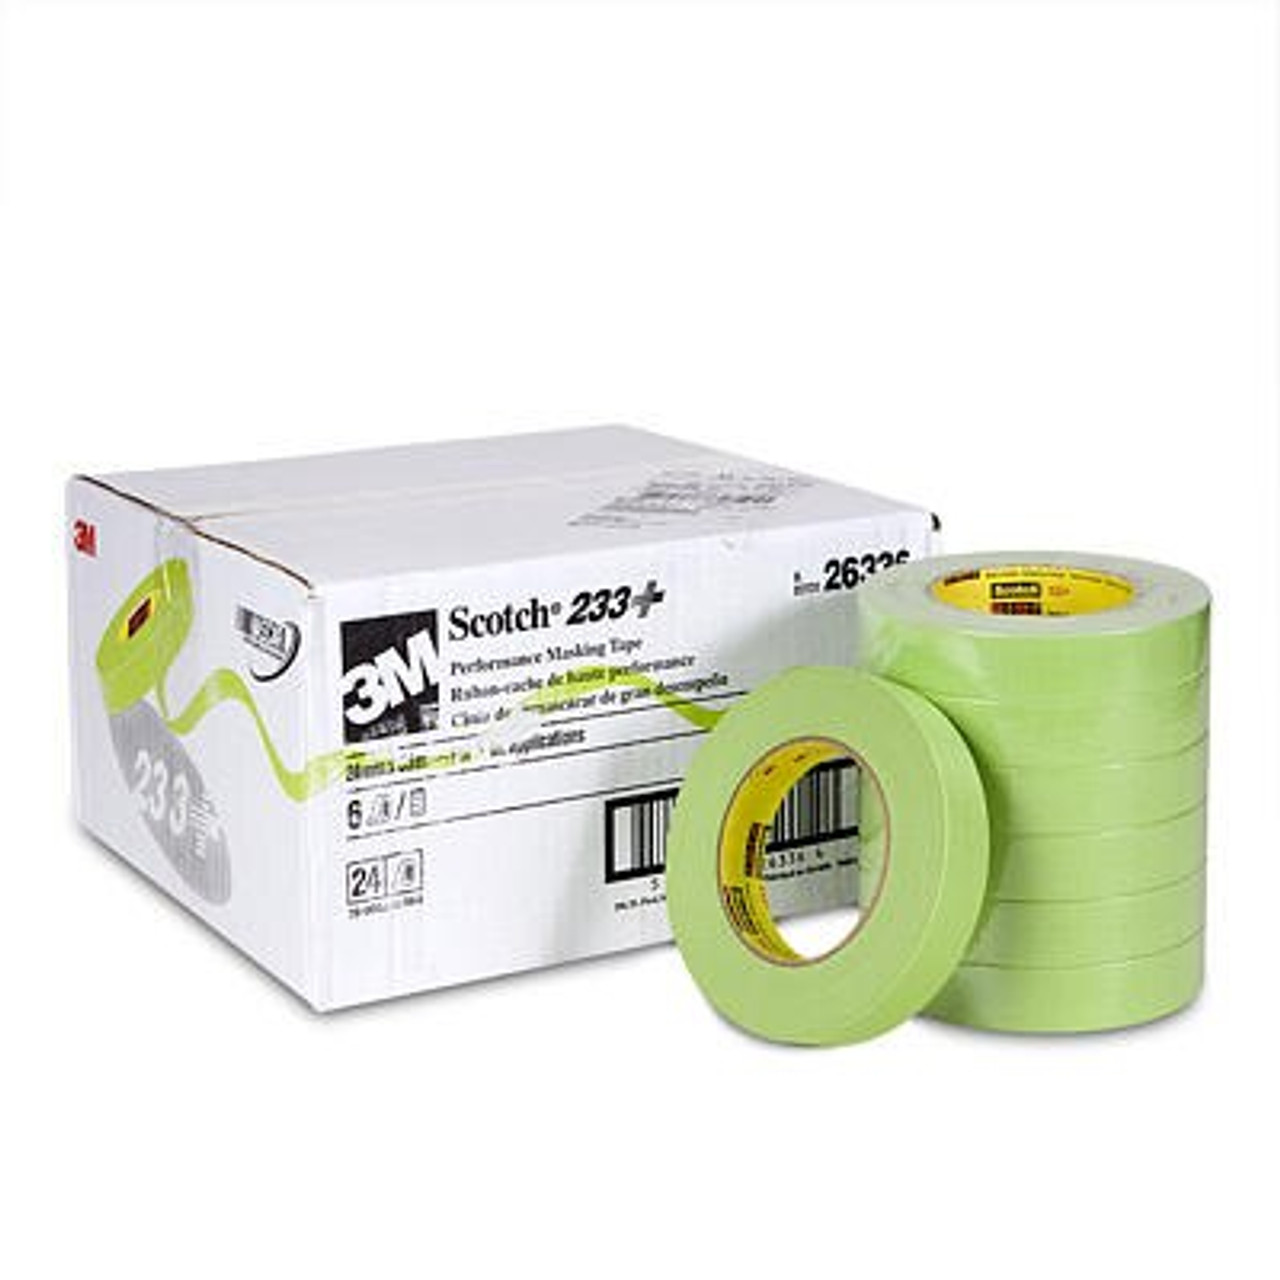 3M™ High Performance Green Masking Tape 401+, 3 mm x 55 m